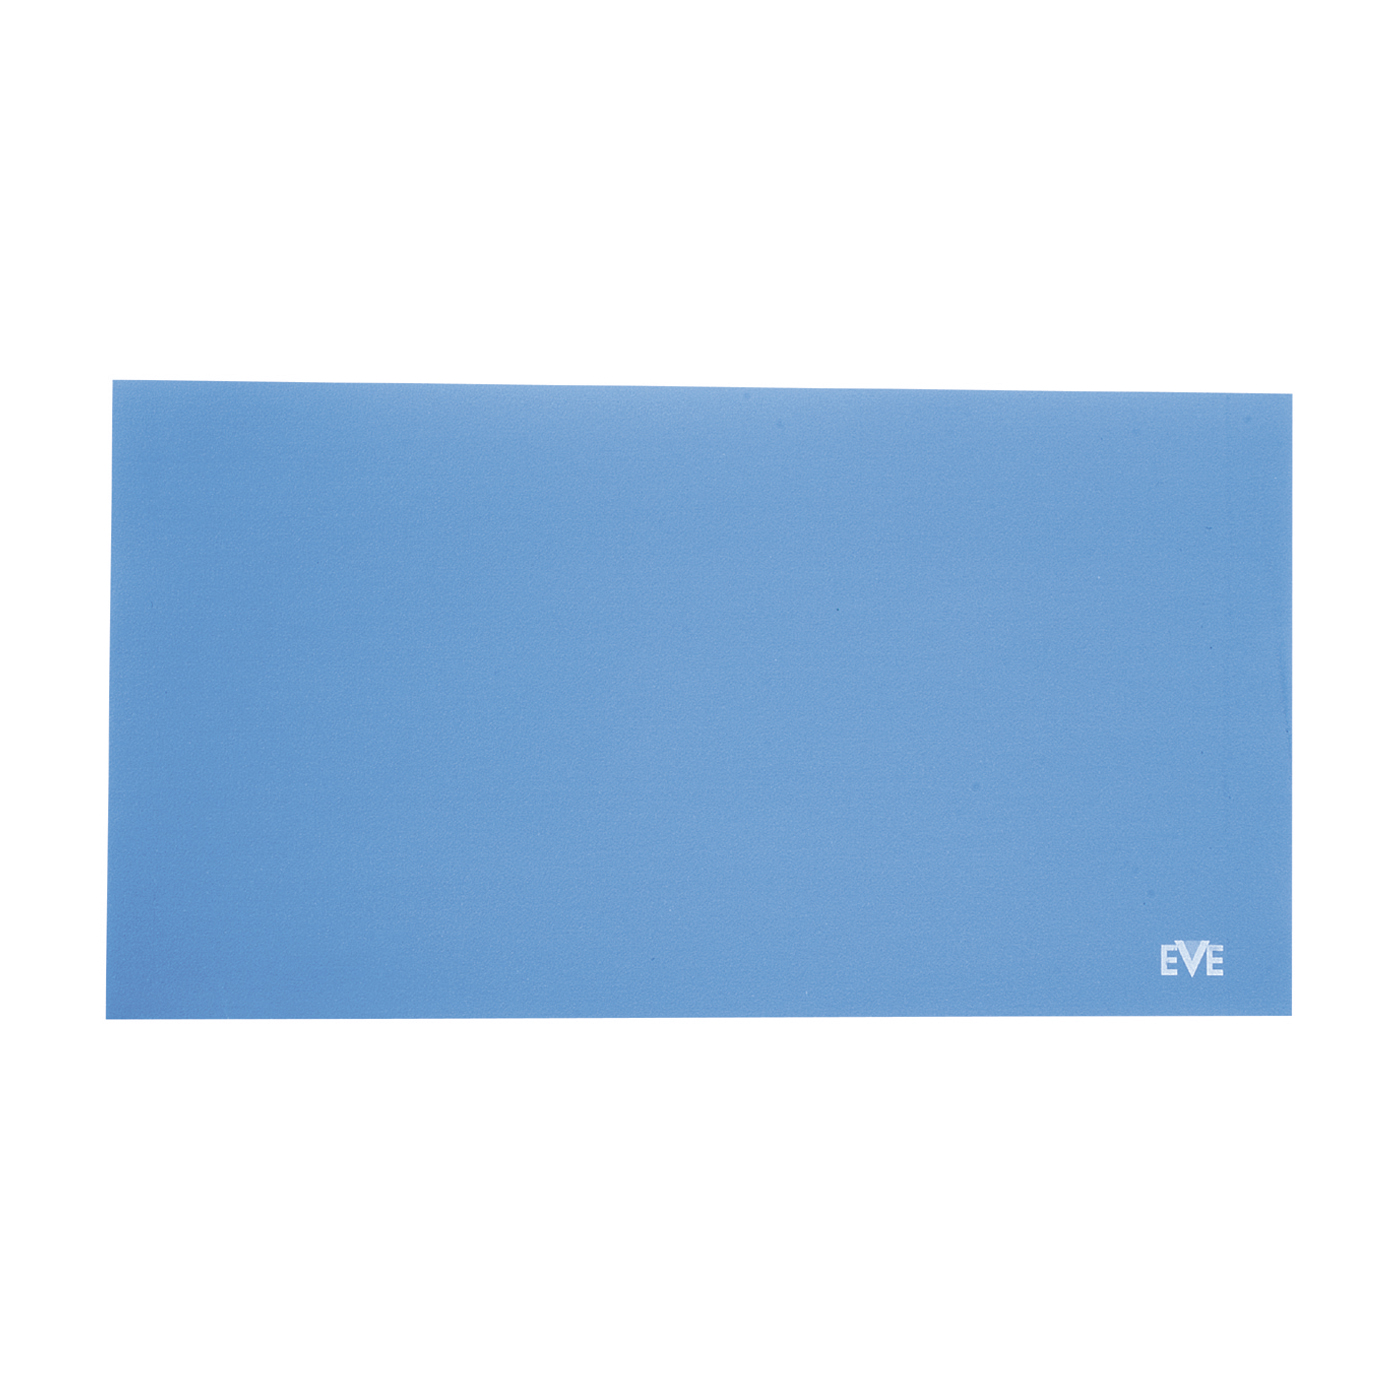 Policloth Polishing System, K2400, Blue, 280 x 150 mm - 3 pieces